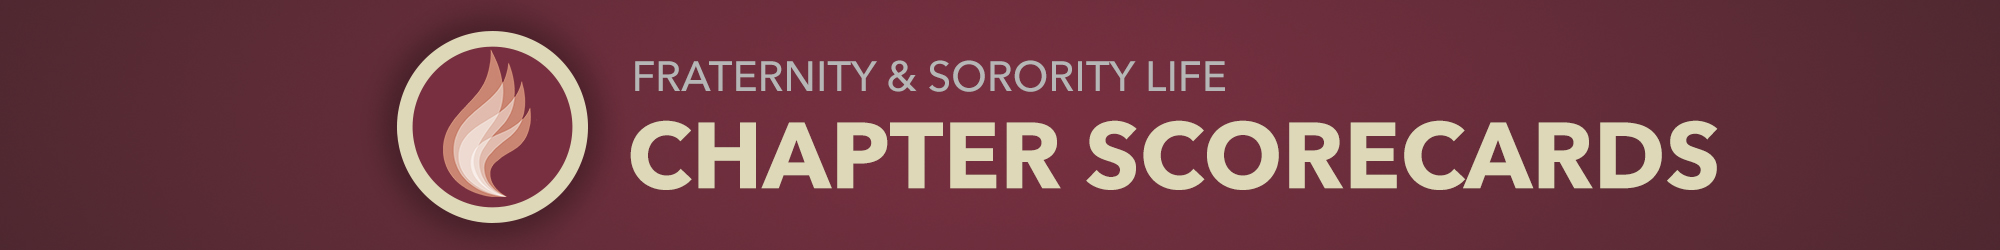 Fraternity and Sorority Scorecard banner